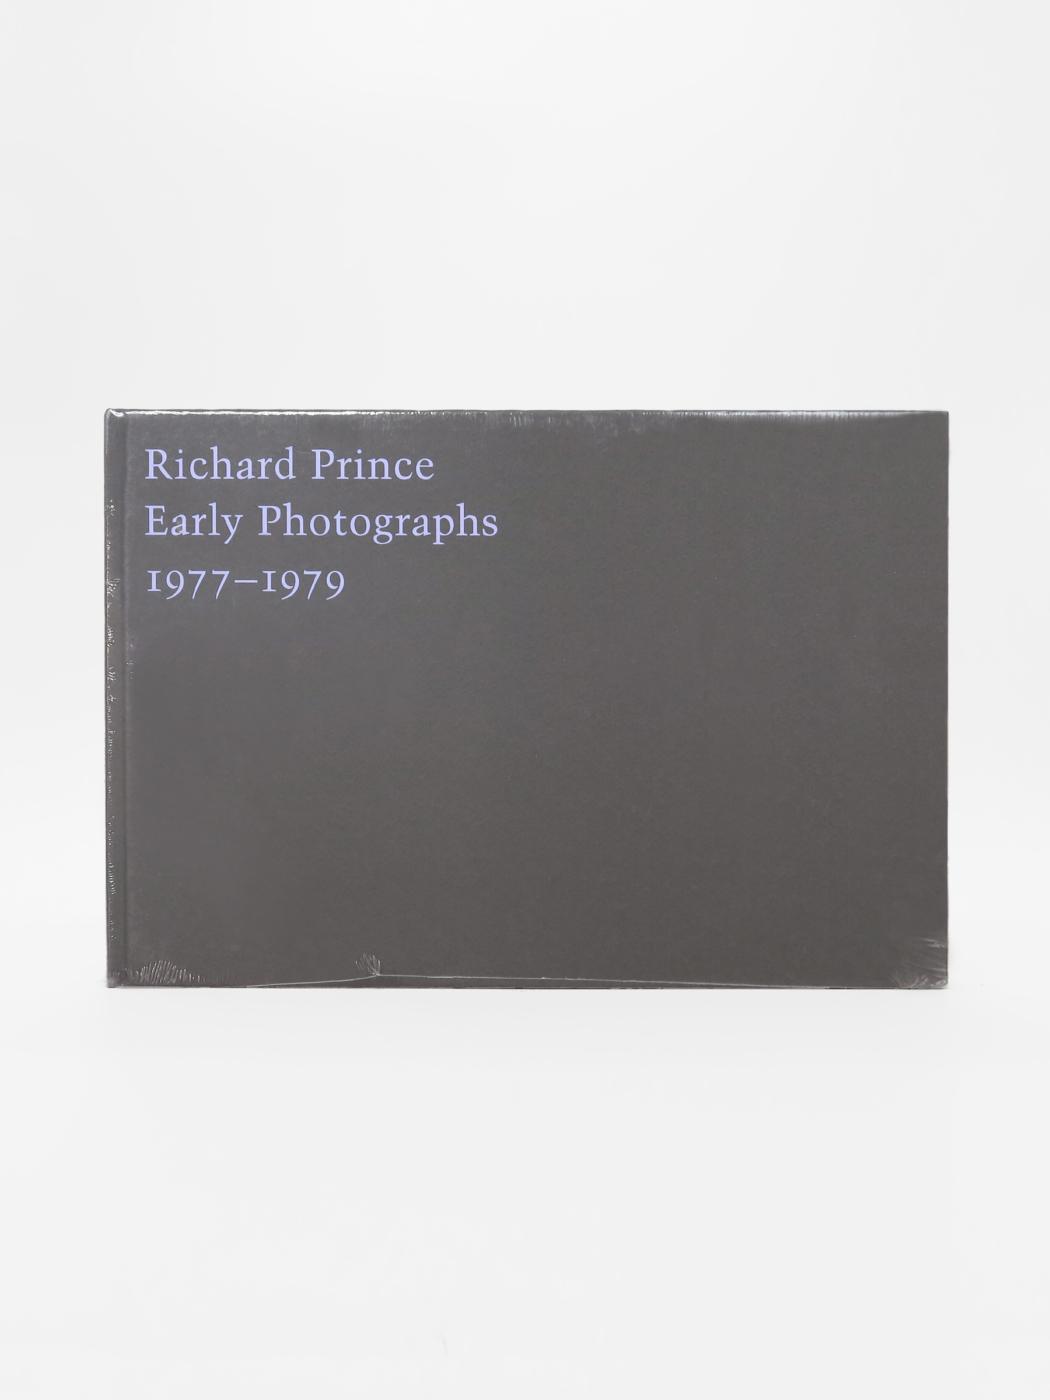 Richard Prince, Early Photographs 1977-1979